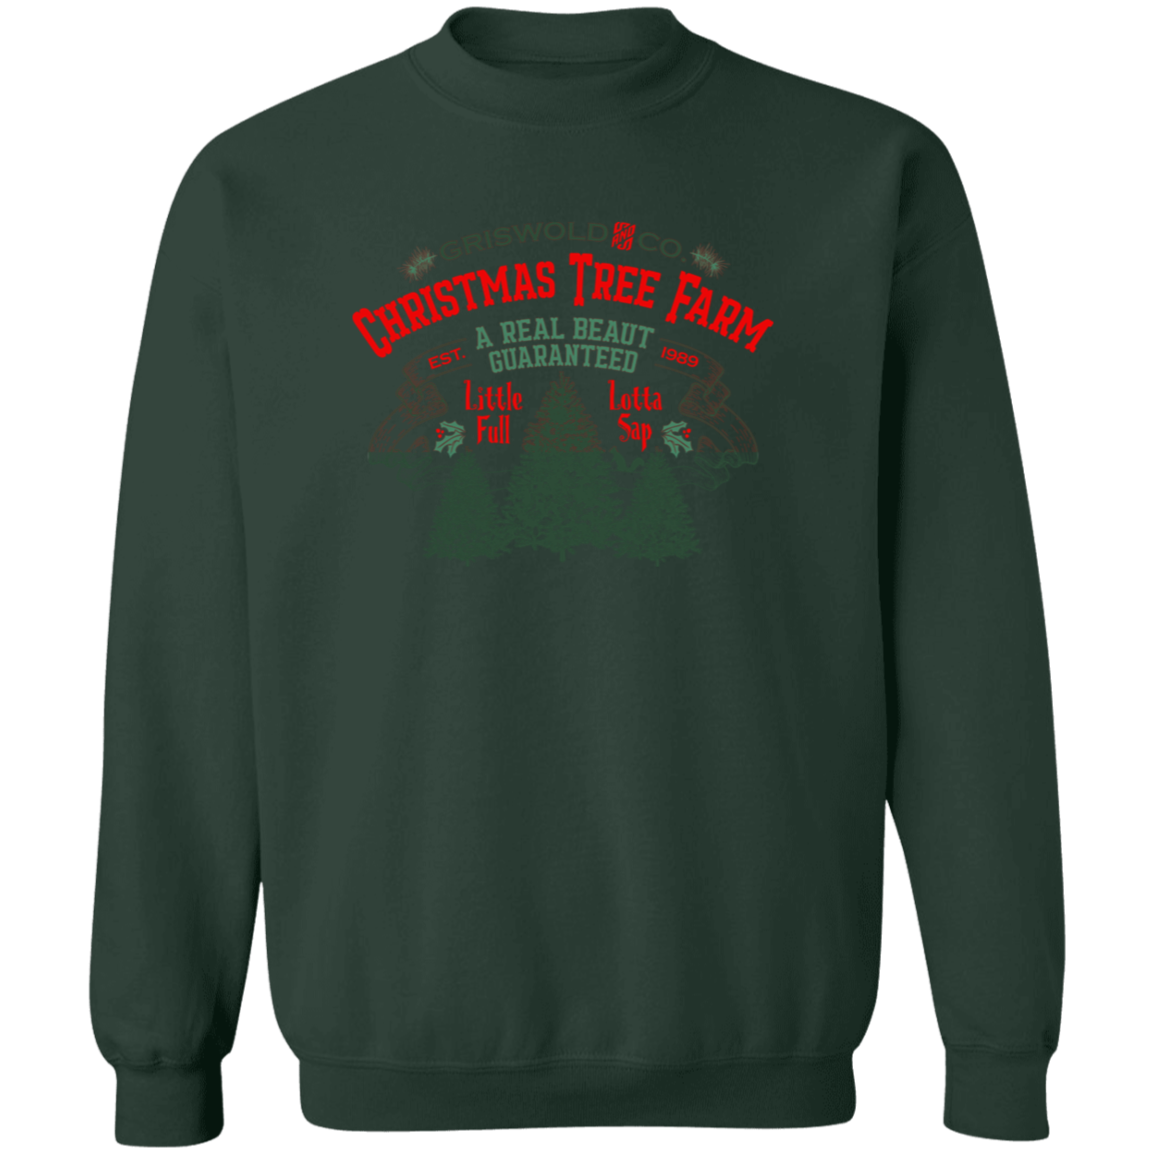 Griswold Christmas Tree Farm Sweatshirt